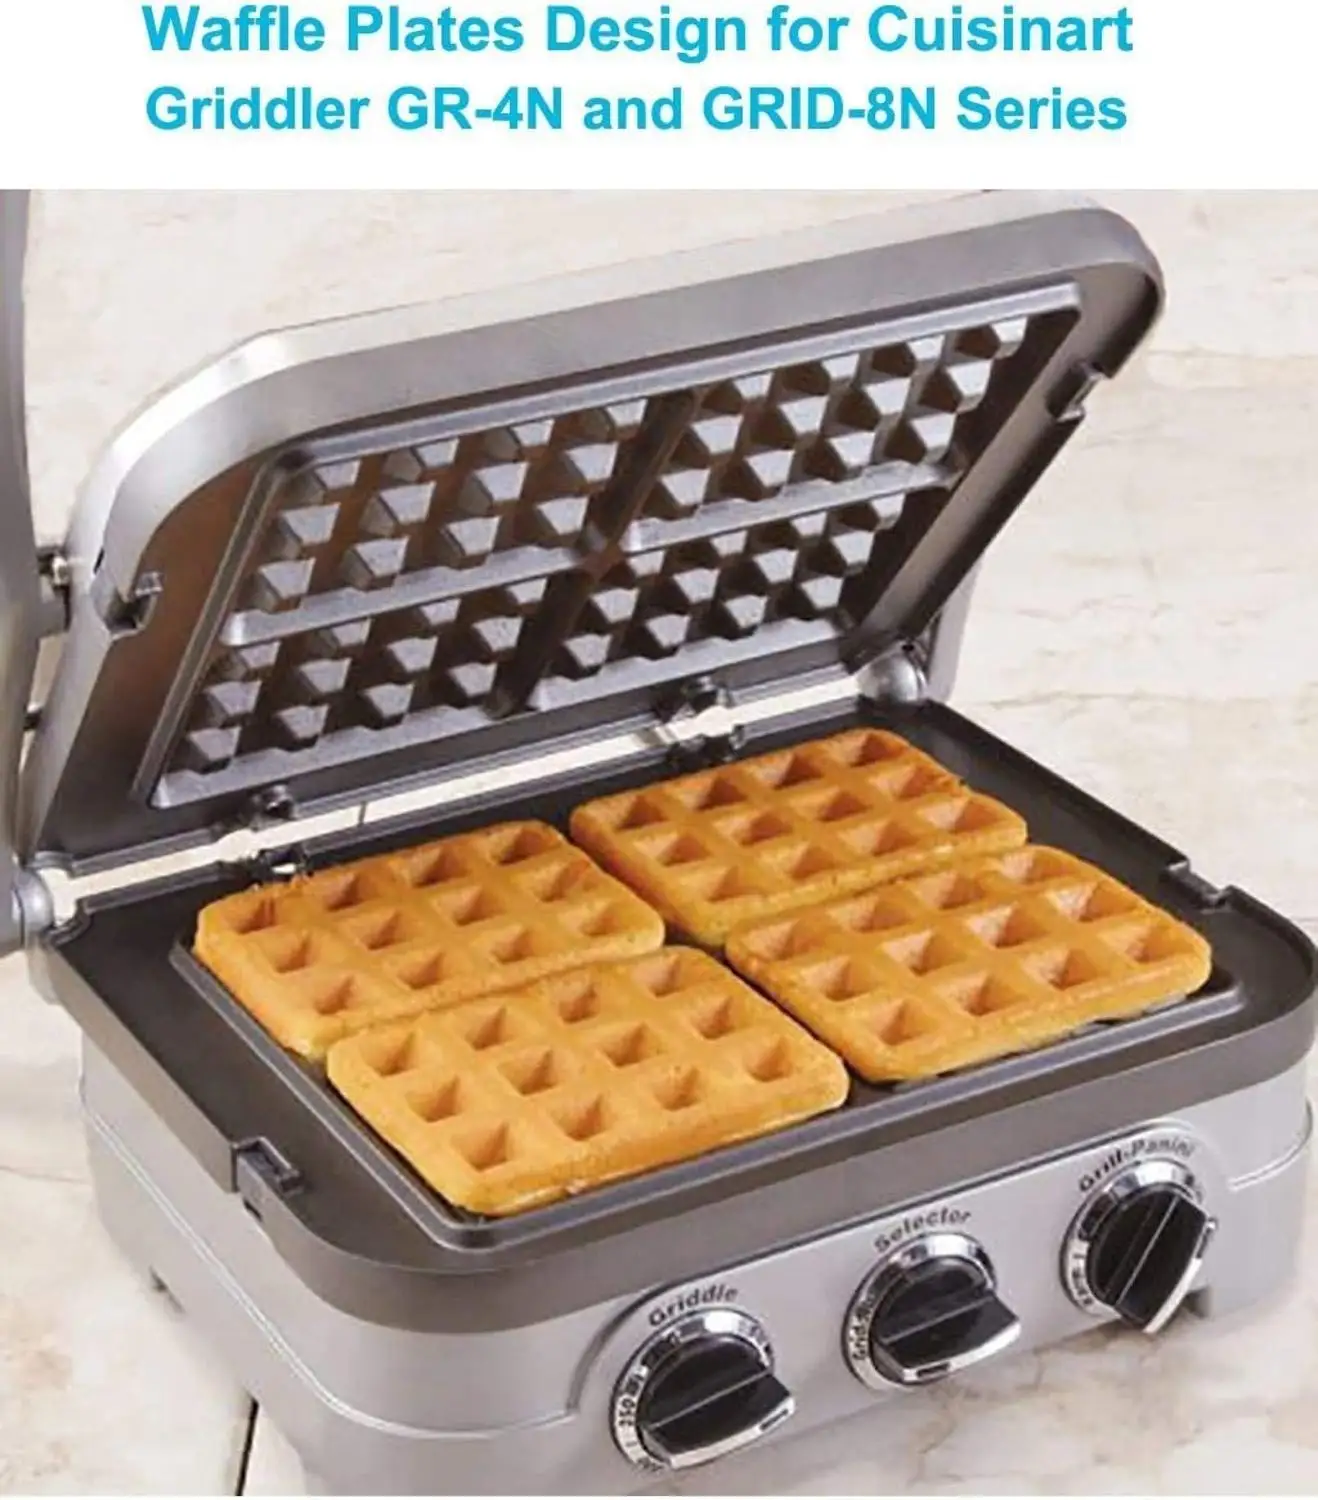 Waffle Plates for Cuisinart Griddler GR-4N and GRID-8N Series Not for Old Model GR-4 or GRID-8 